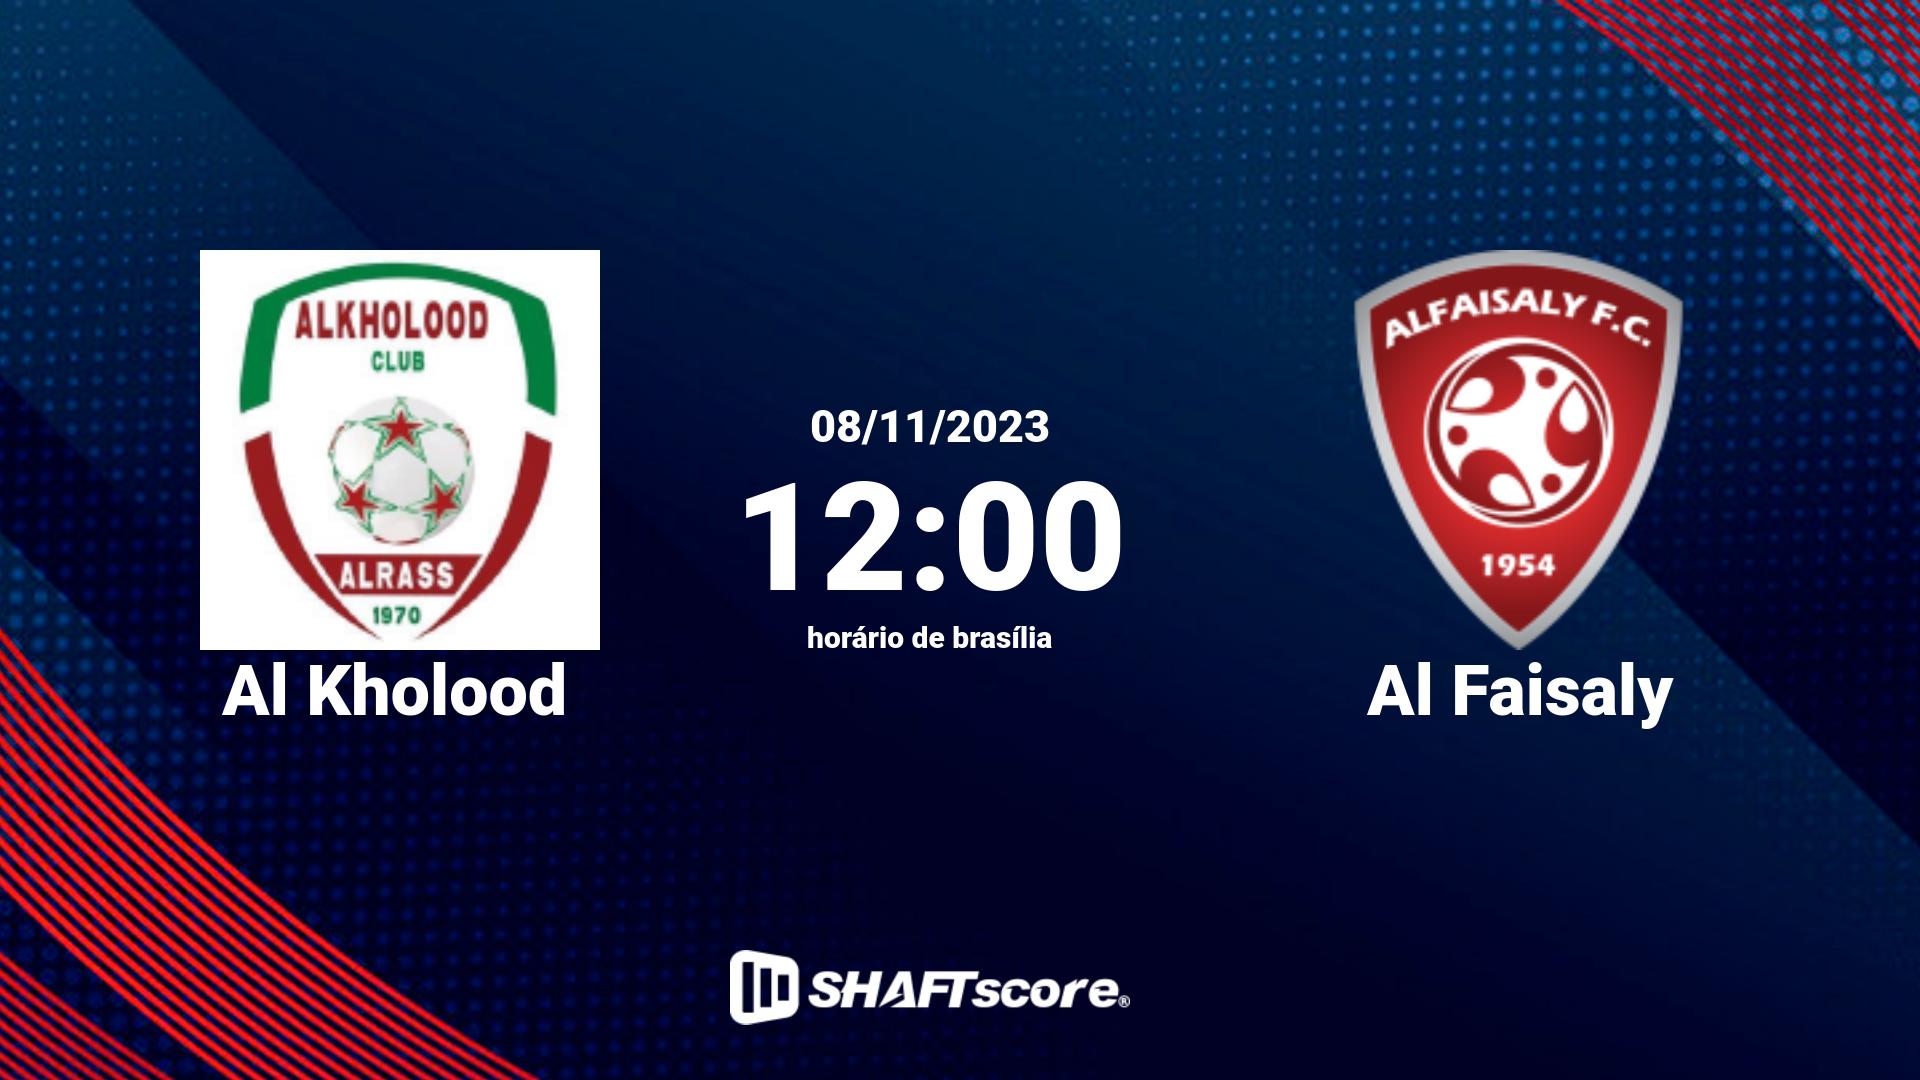 Estatísticas do jogo Al Kholood vs Al Faisaly 08.11 12:00